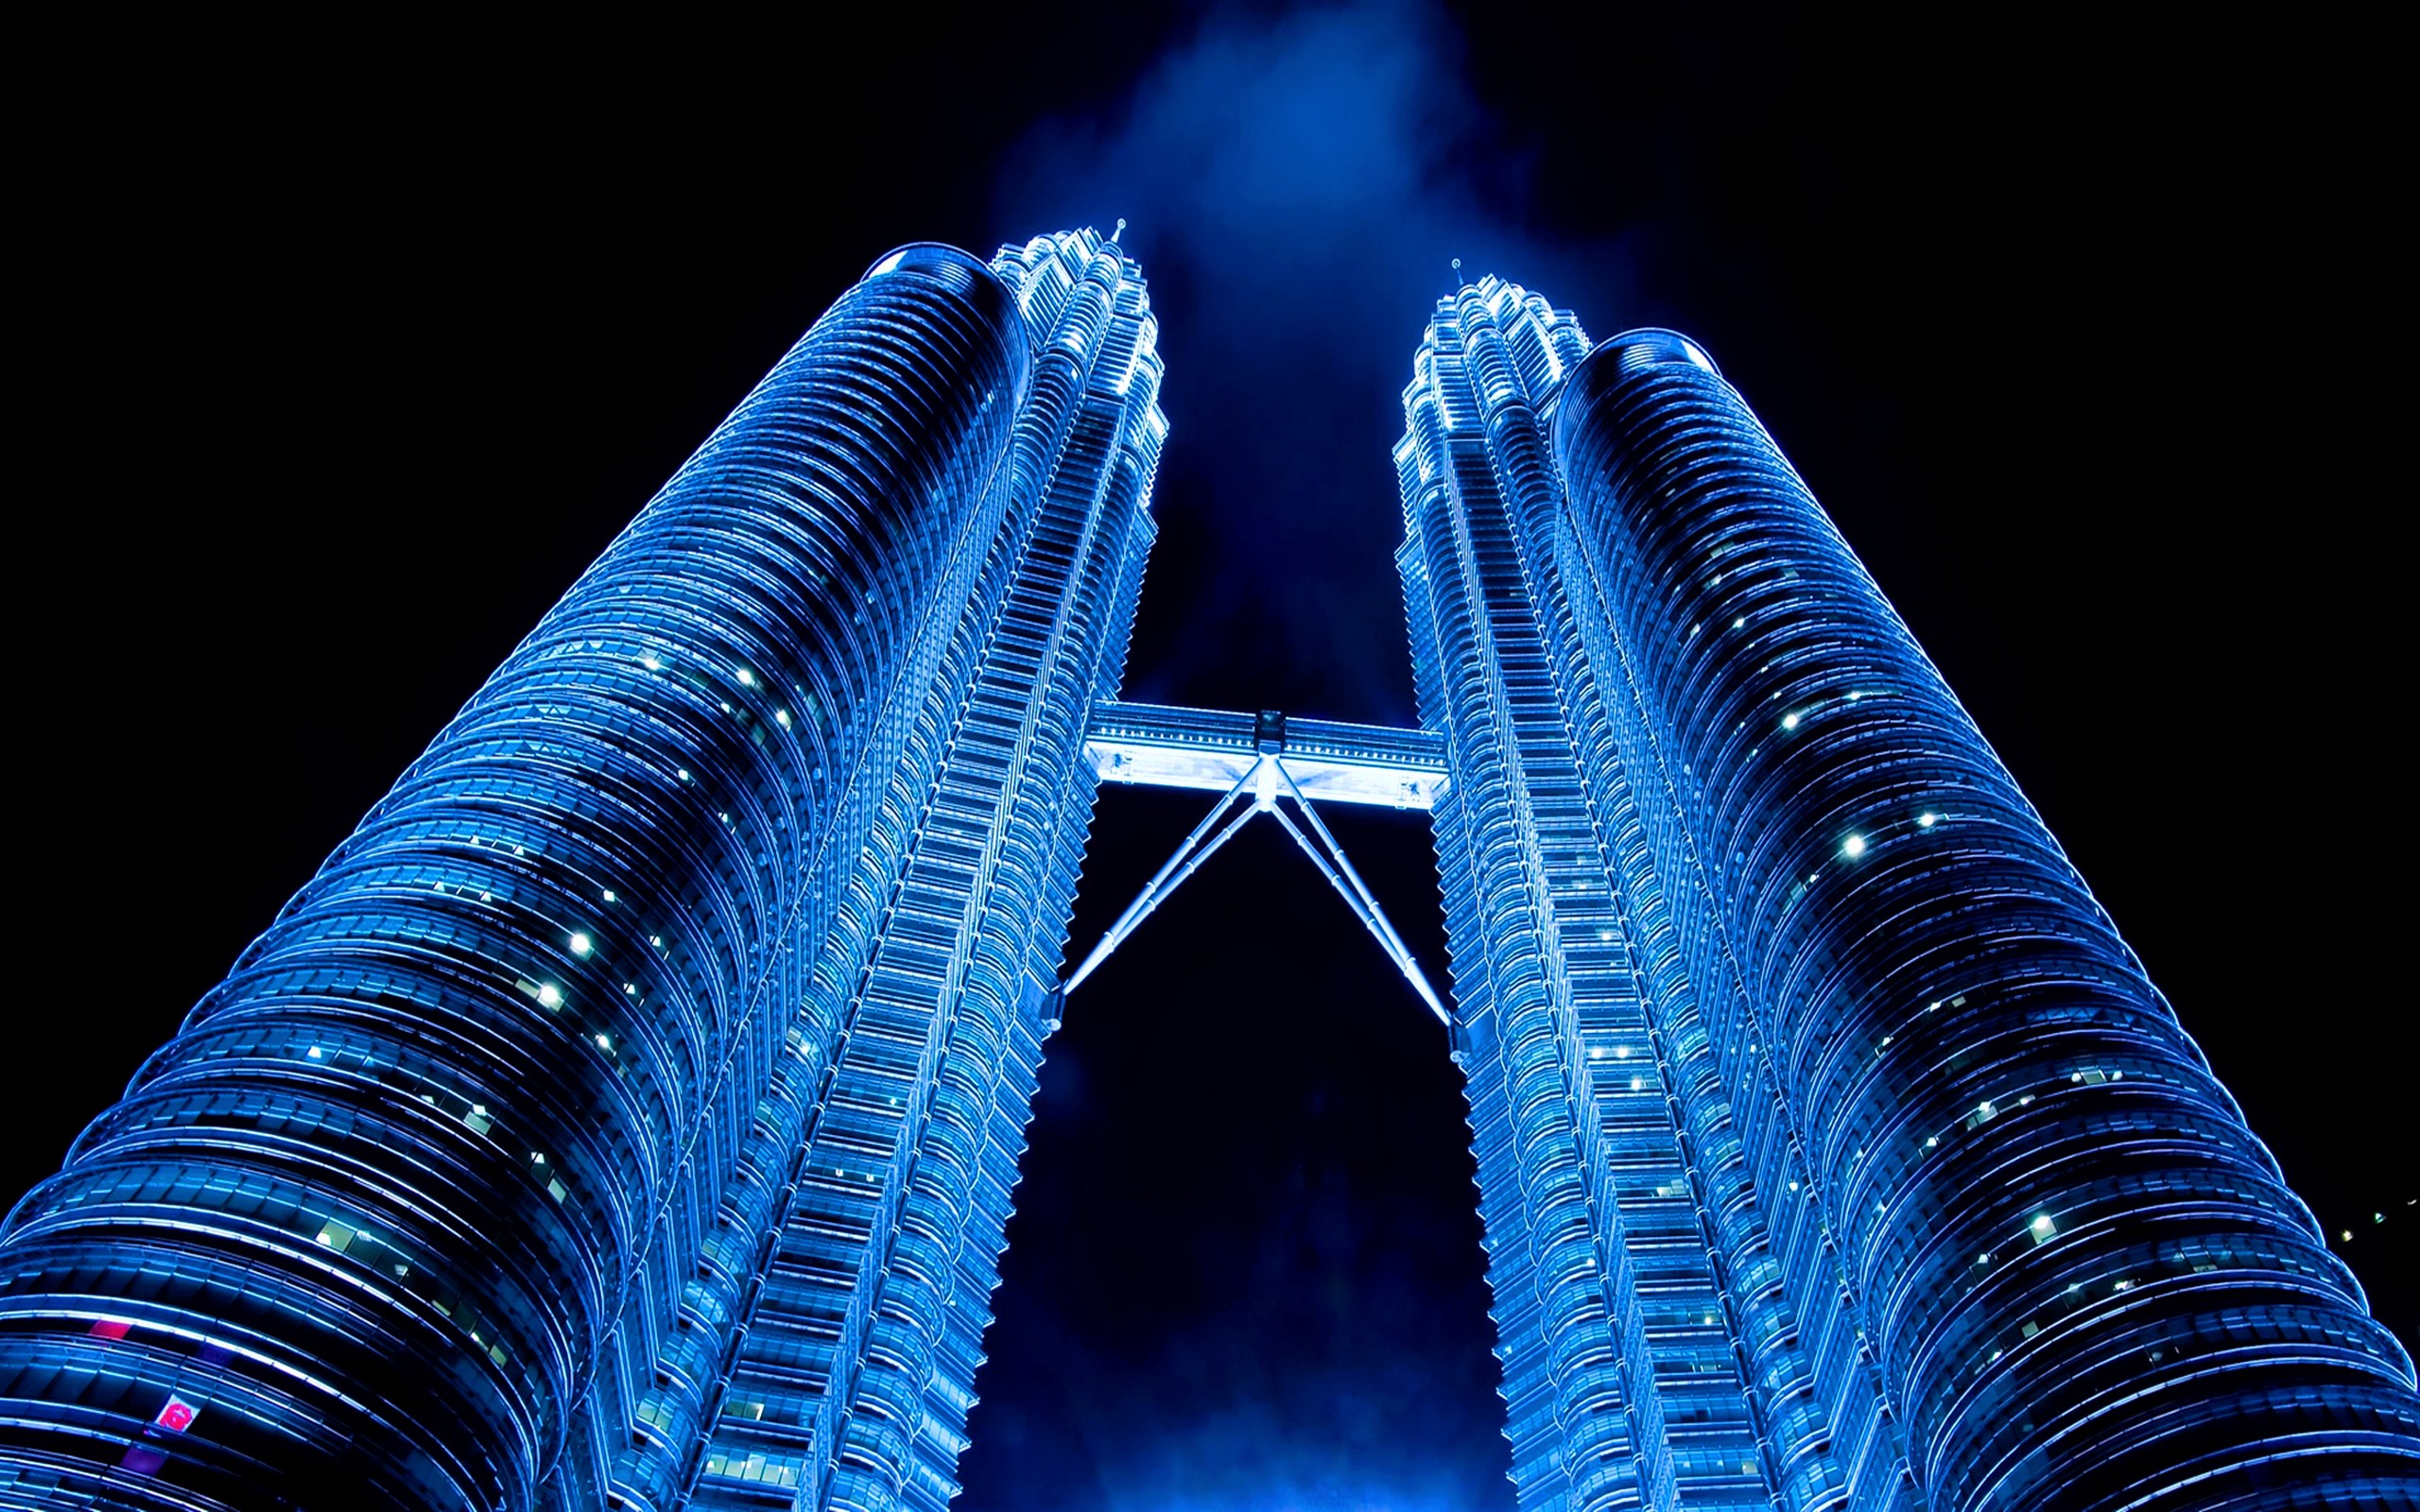 kuala lumpur, man made, petronas towers, blue, light, malaysia, night, skyscraper